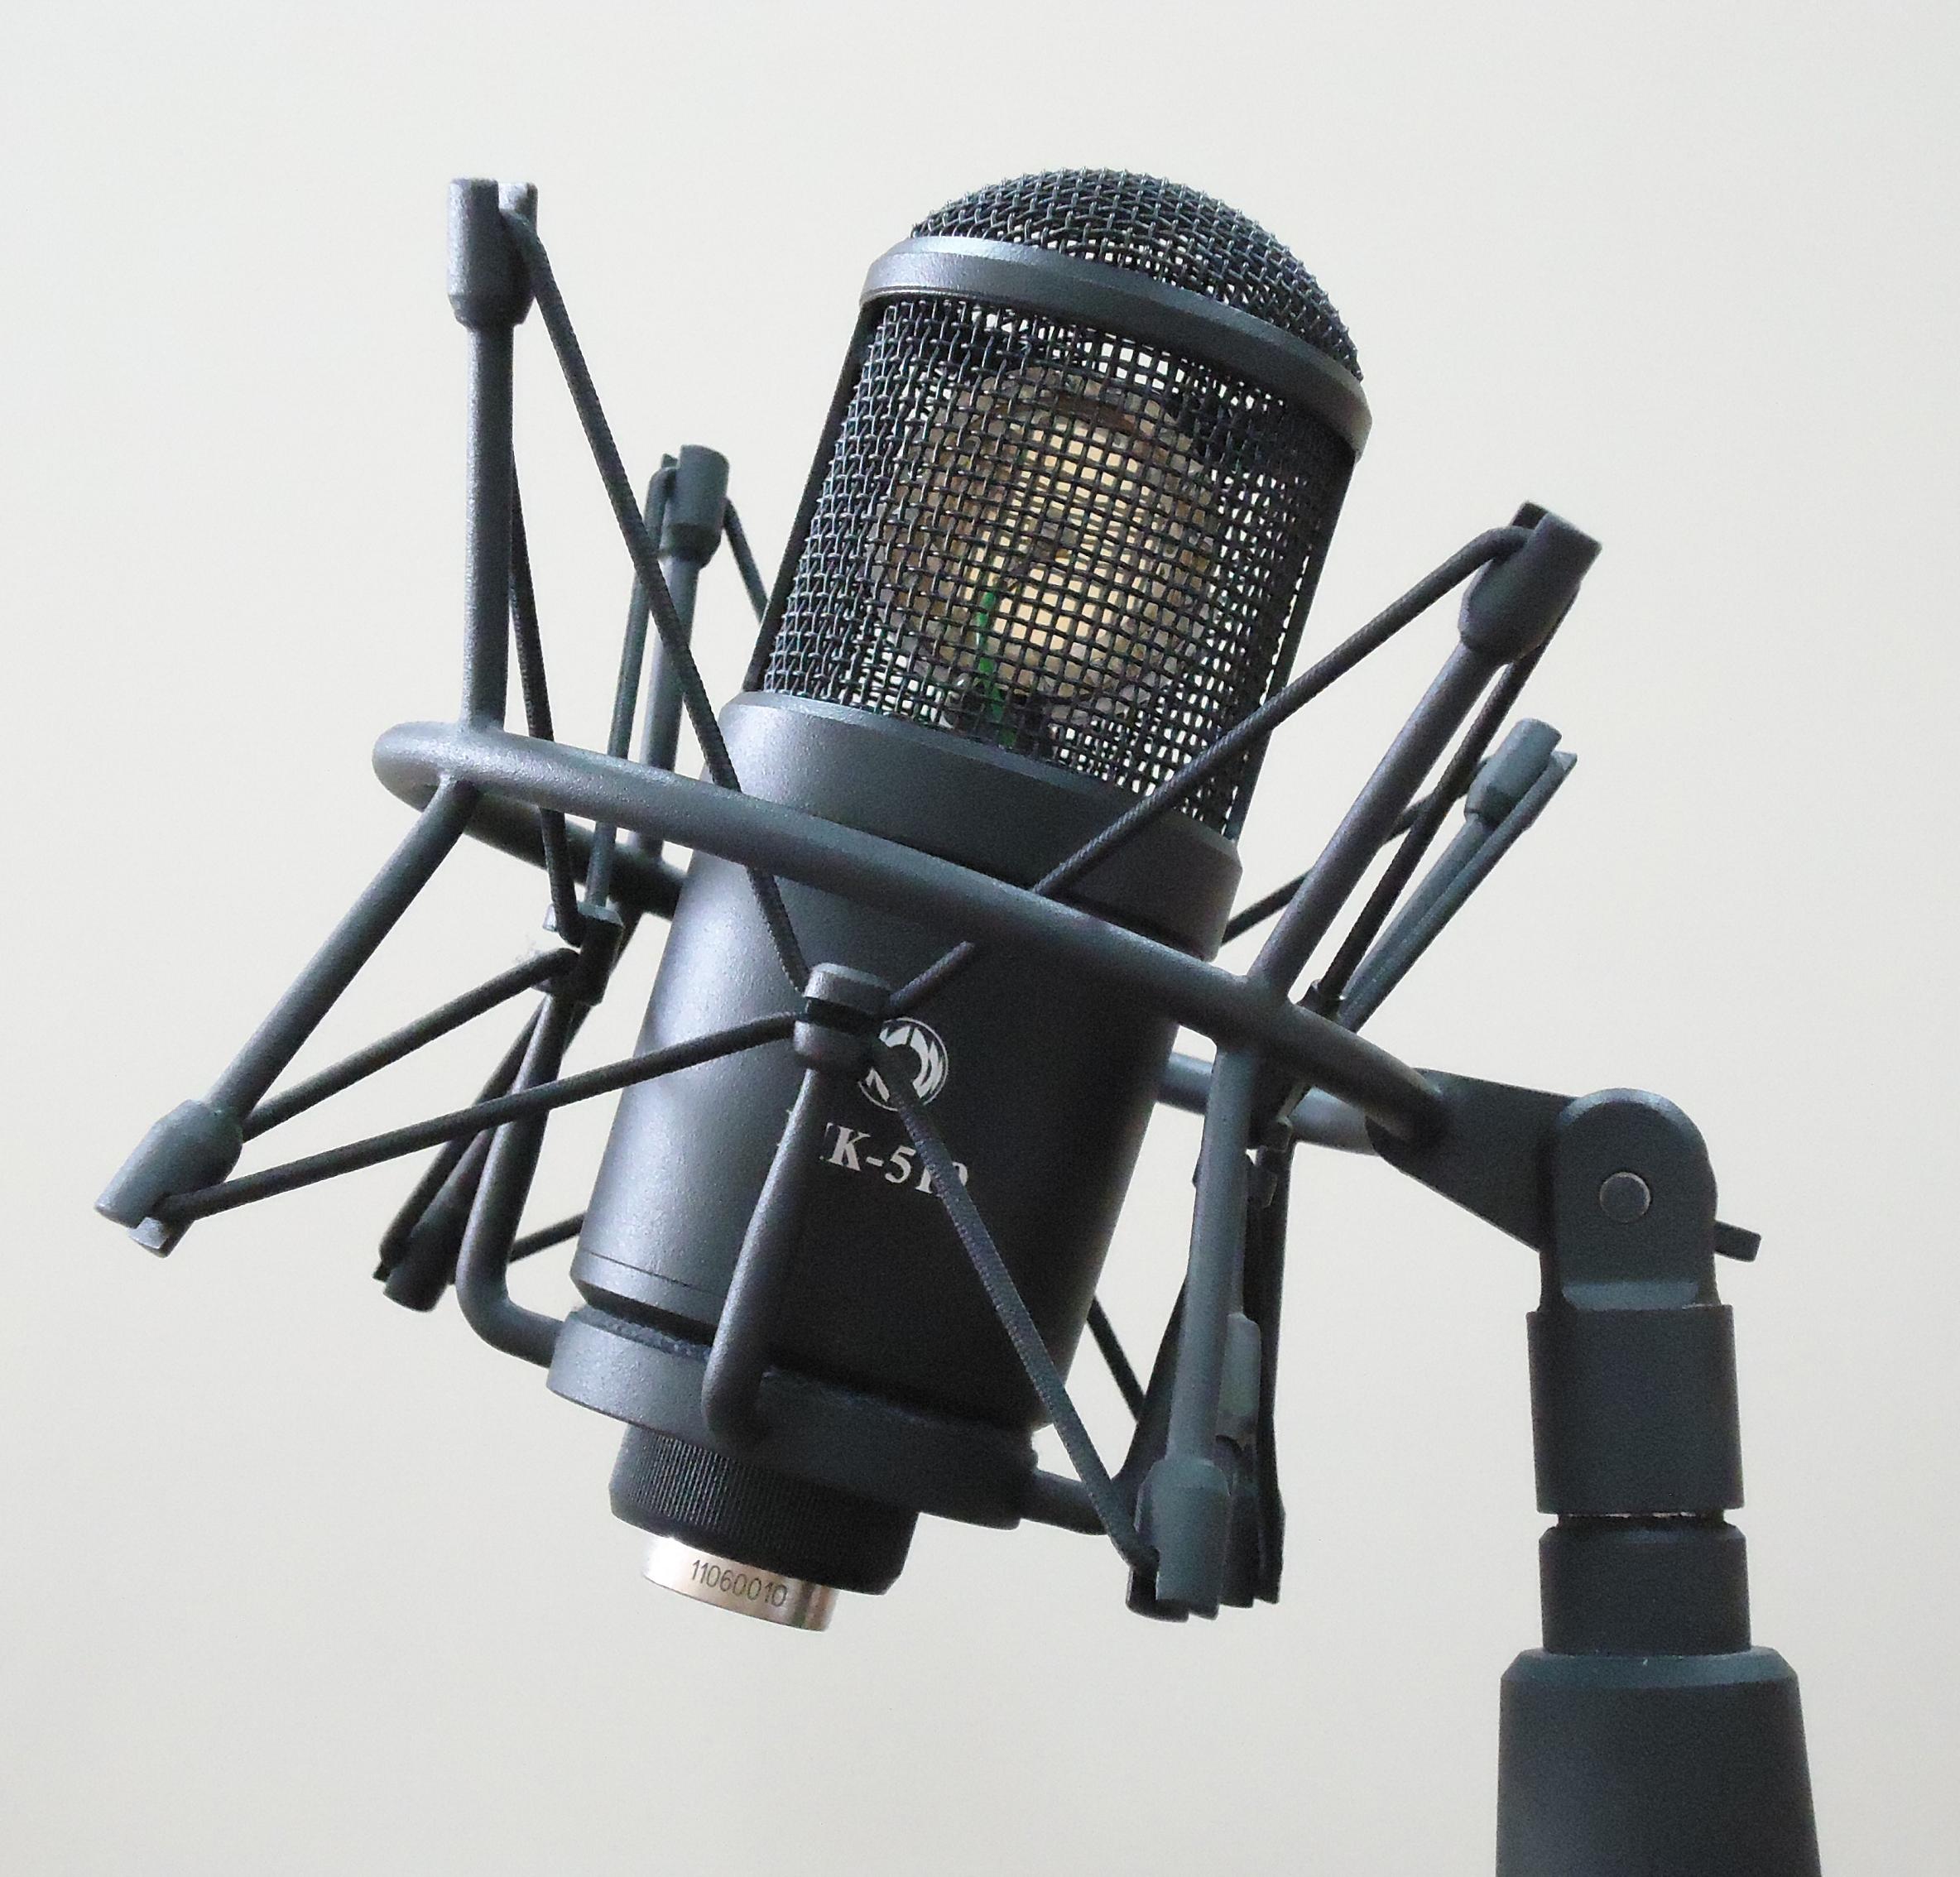  Microphone Octava MK-519